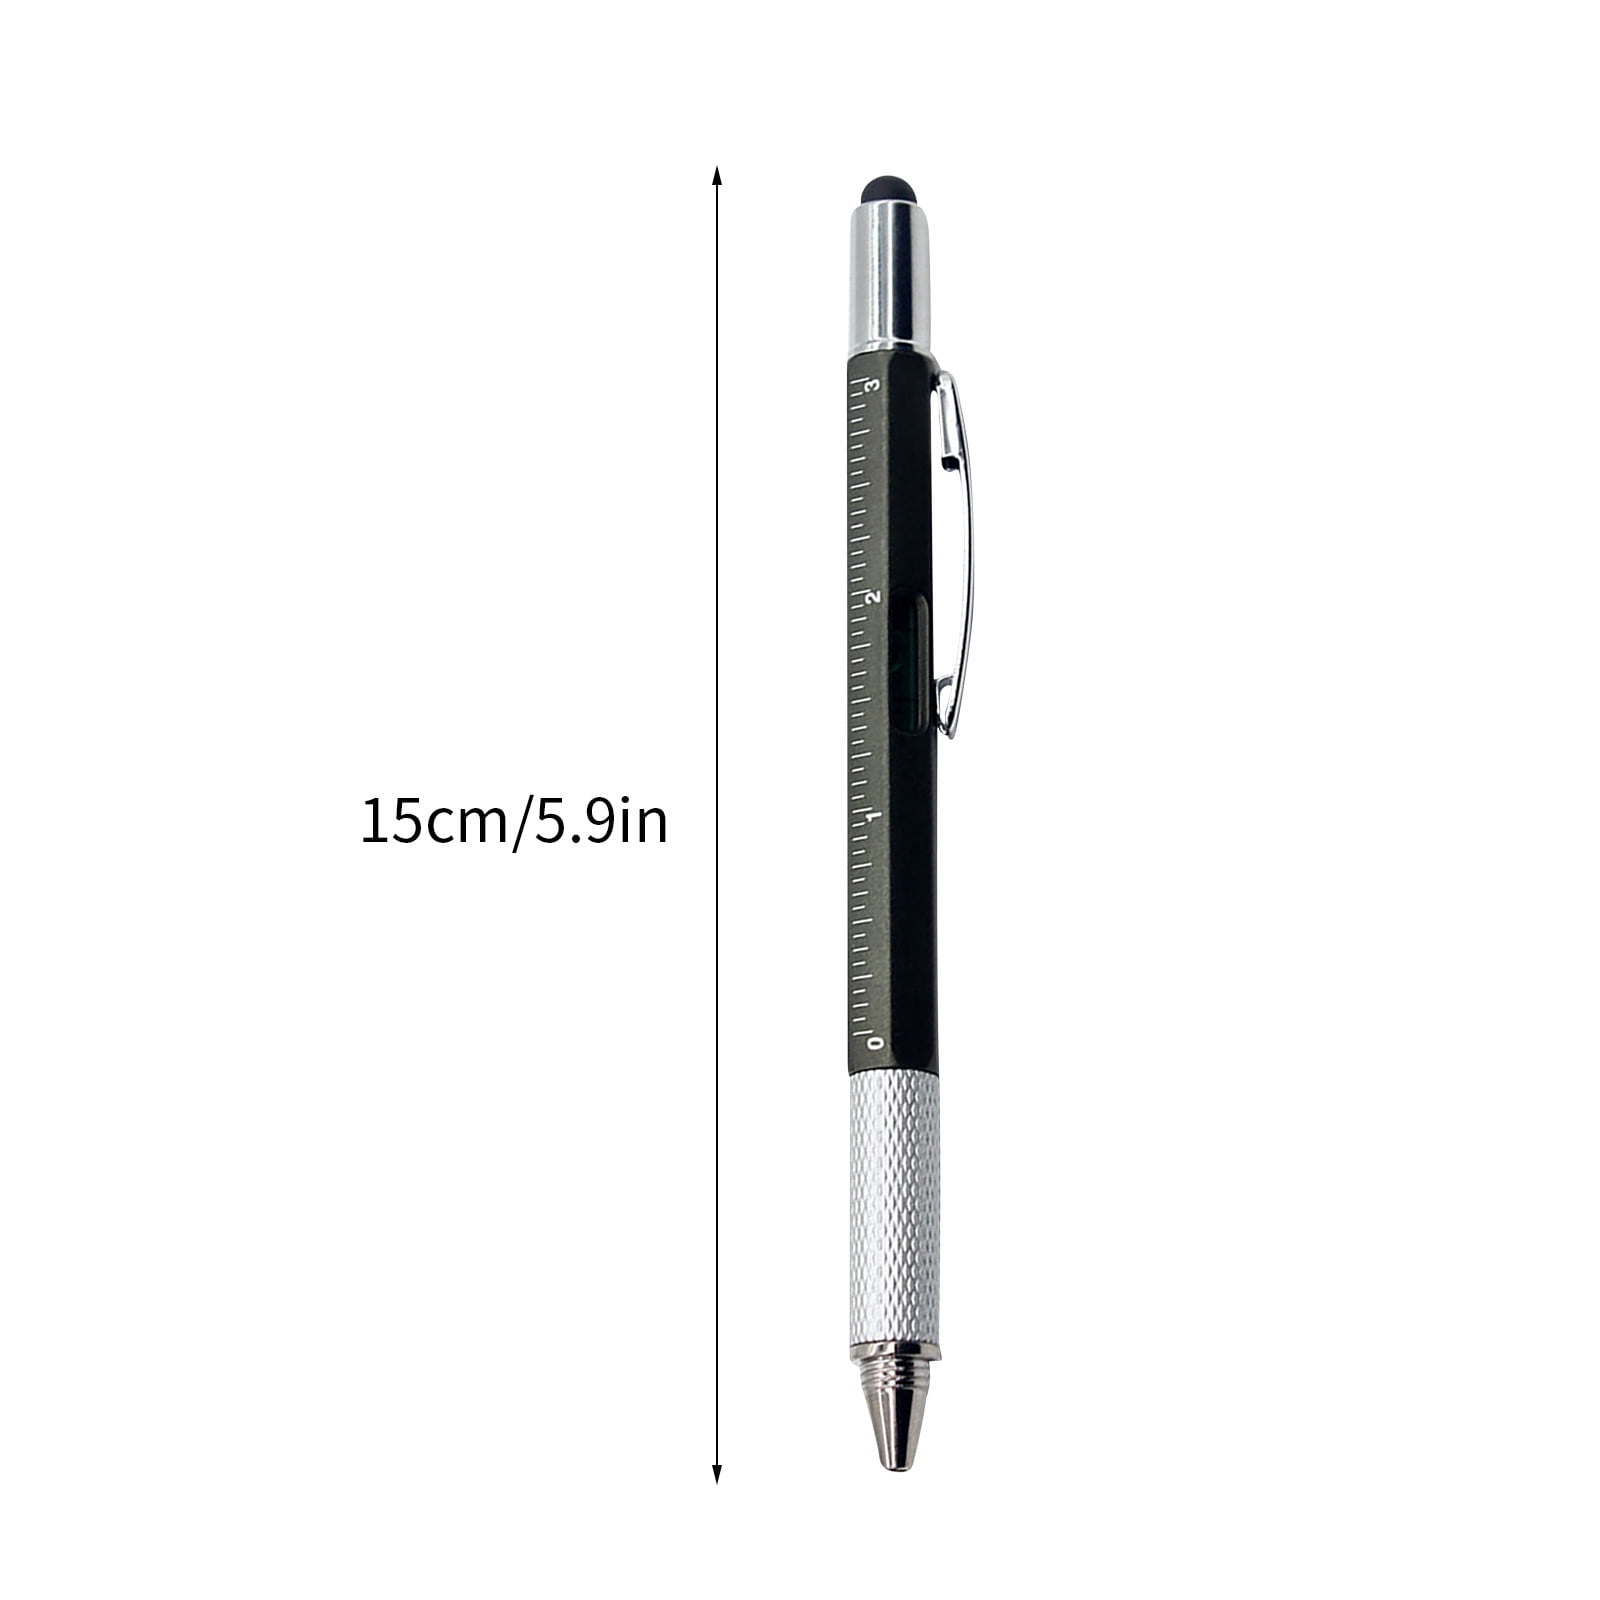  Ciieeo 5pcs Ballpoint Pen Tool Pens Students